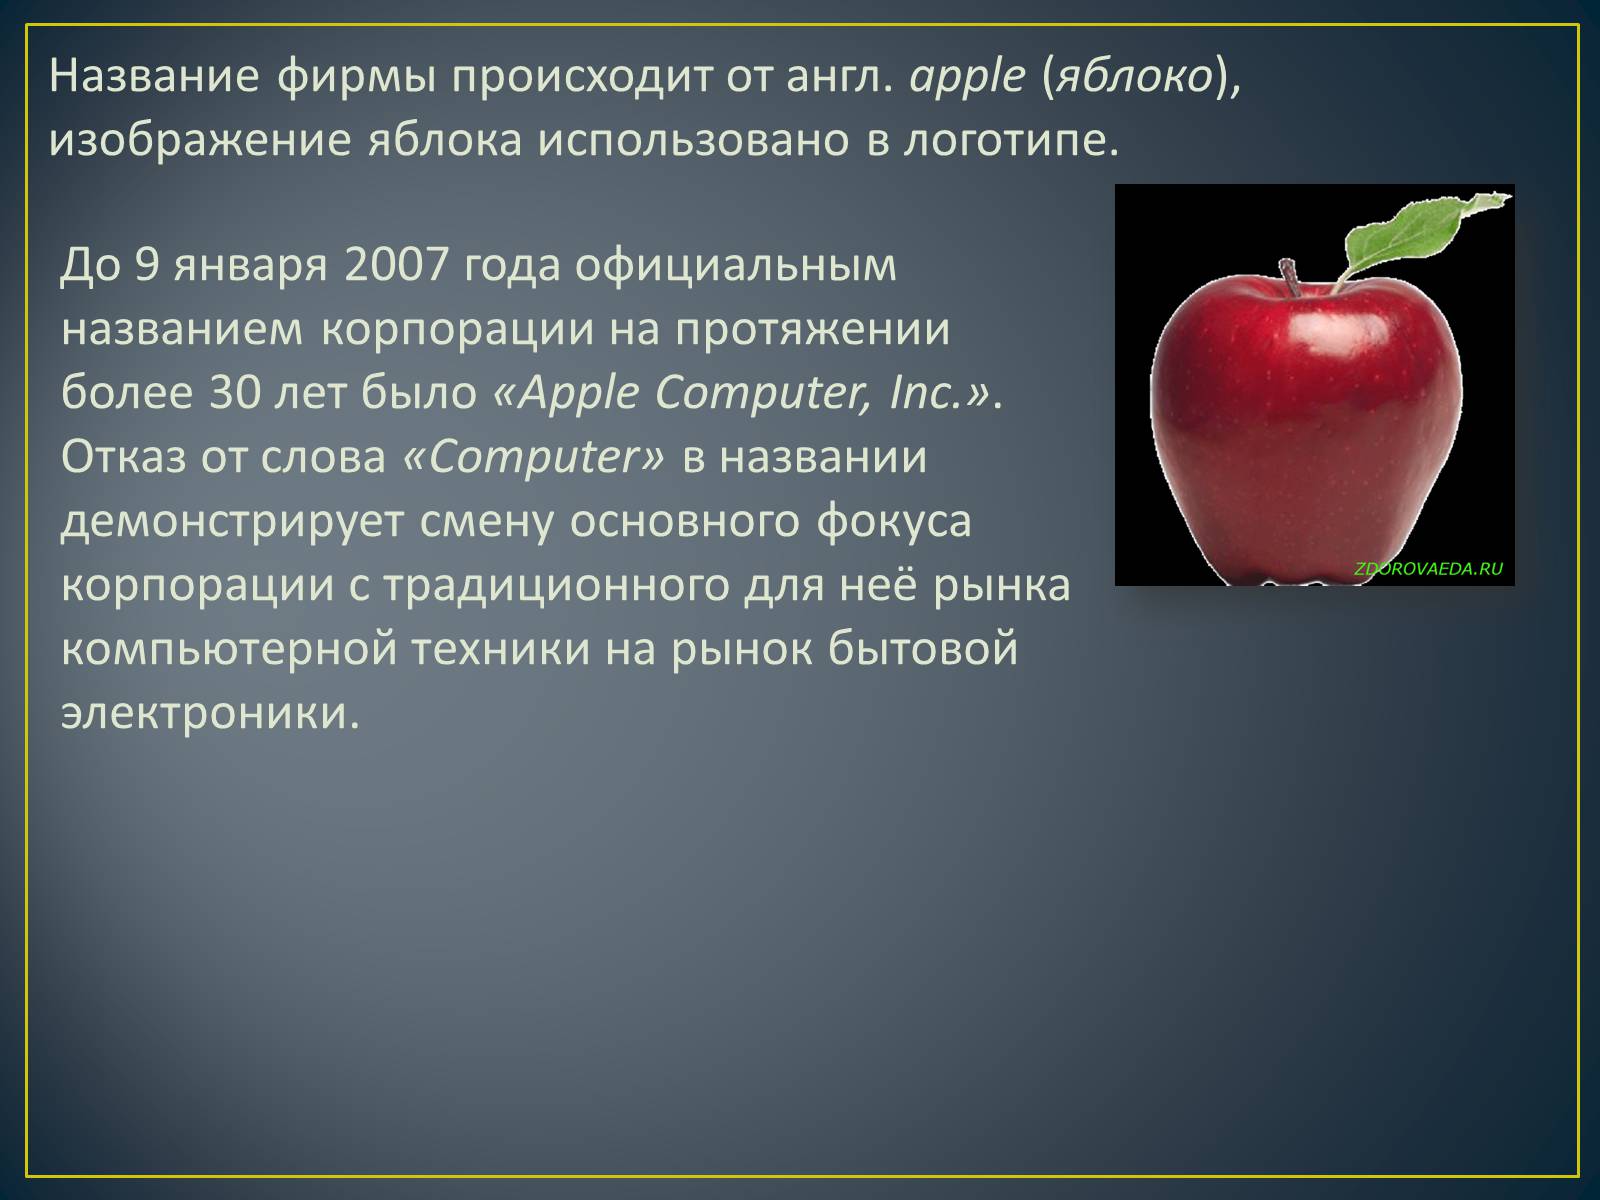 Презентация apple на английском - 92 фото